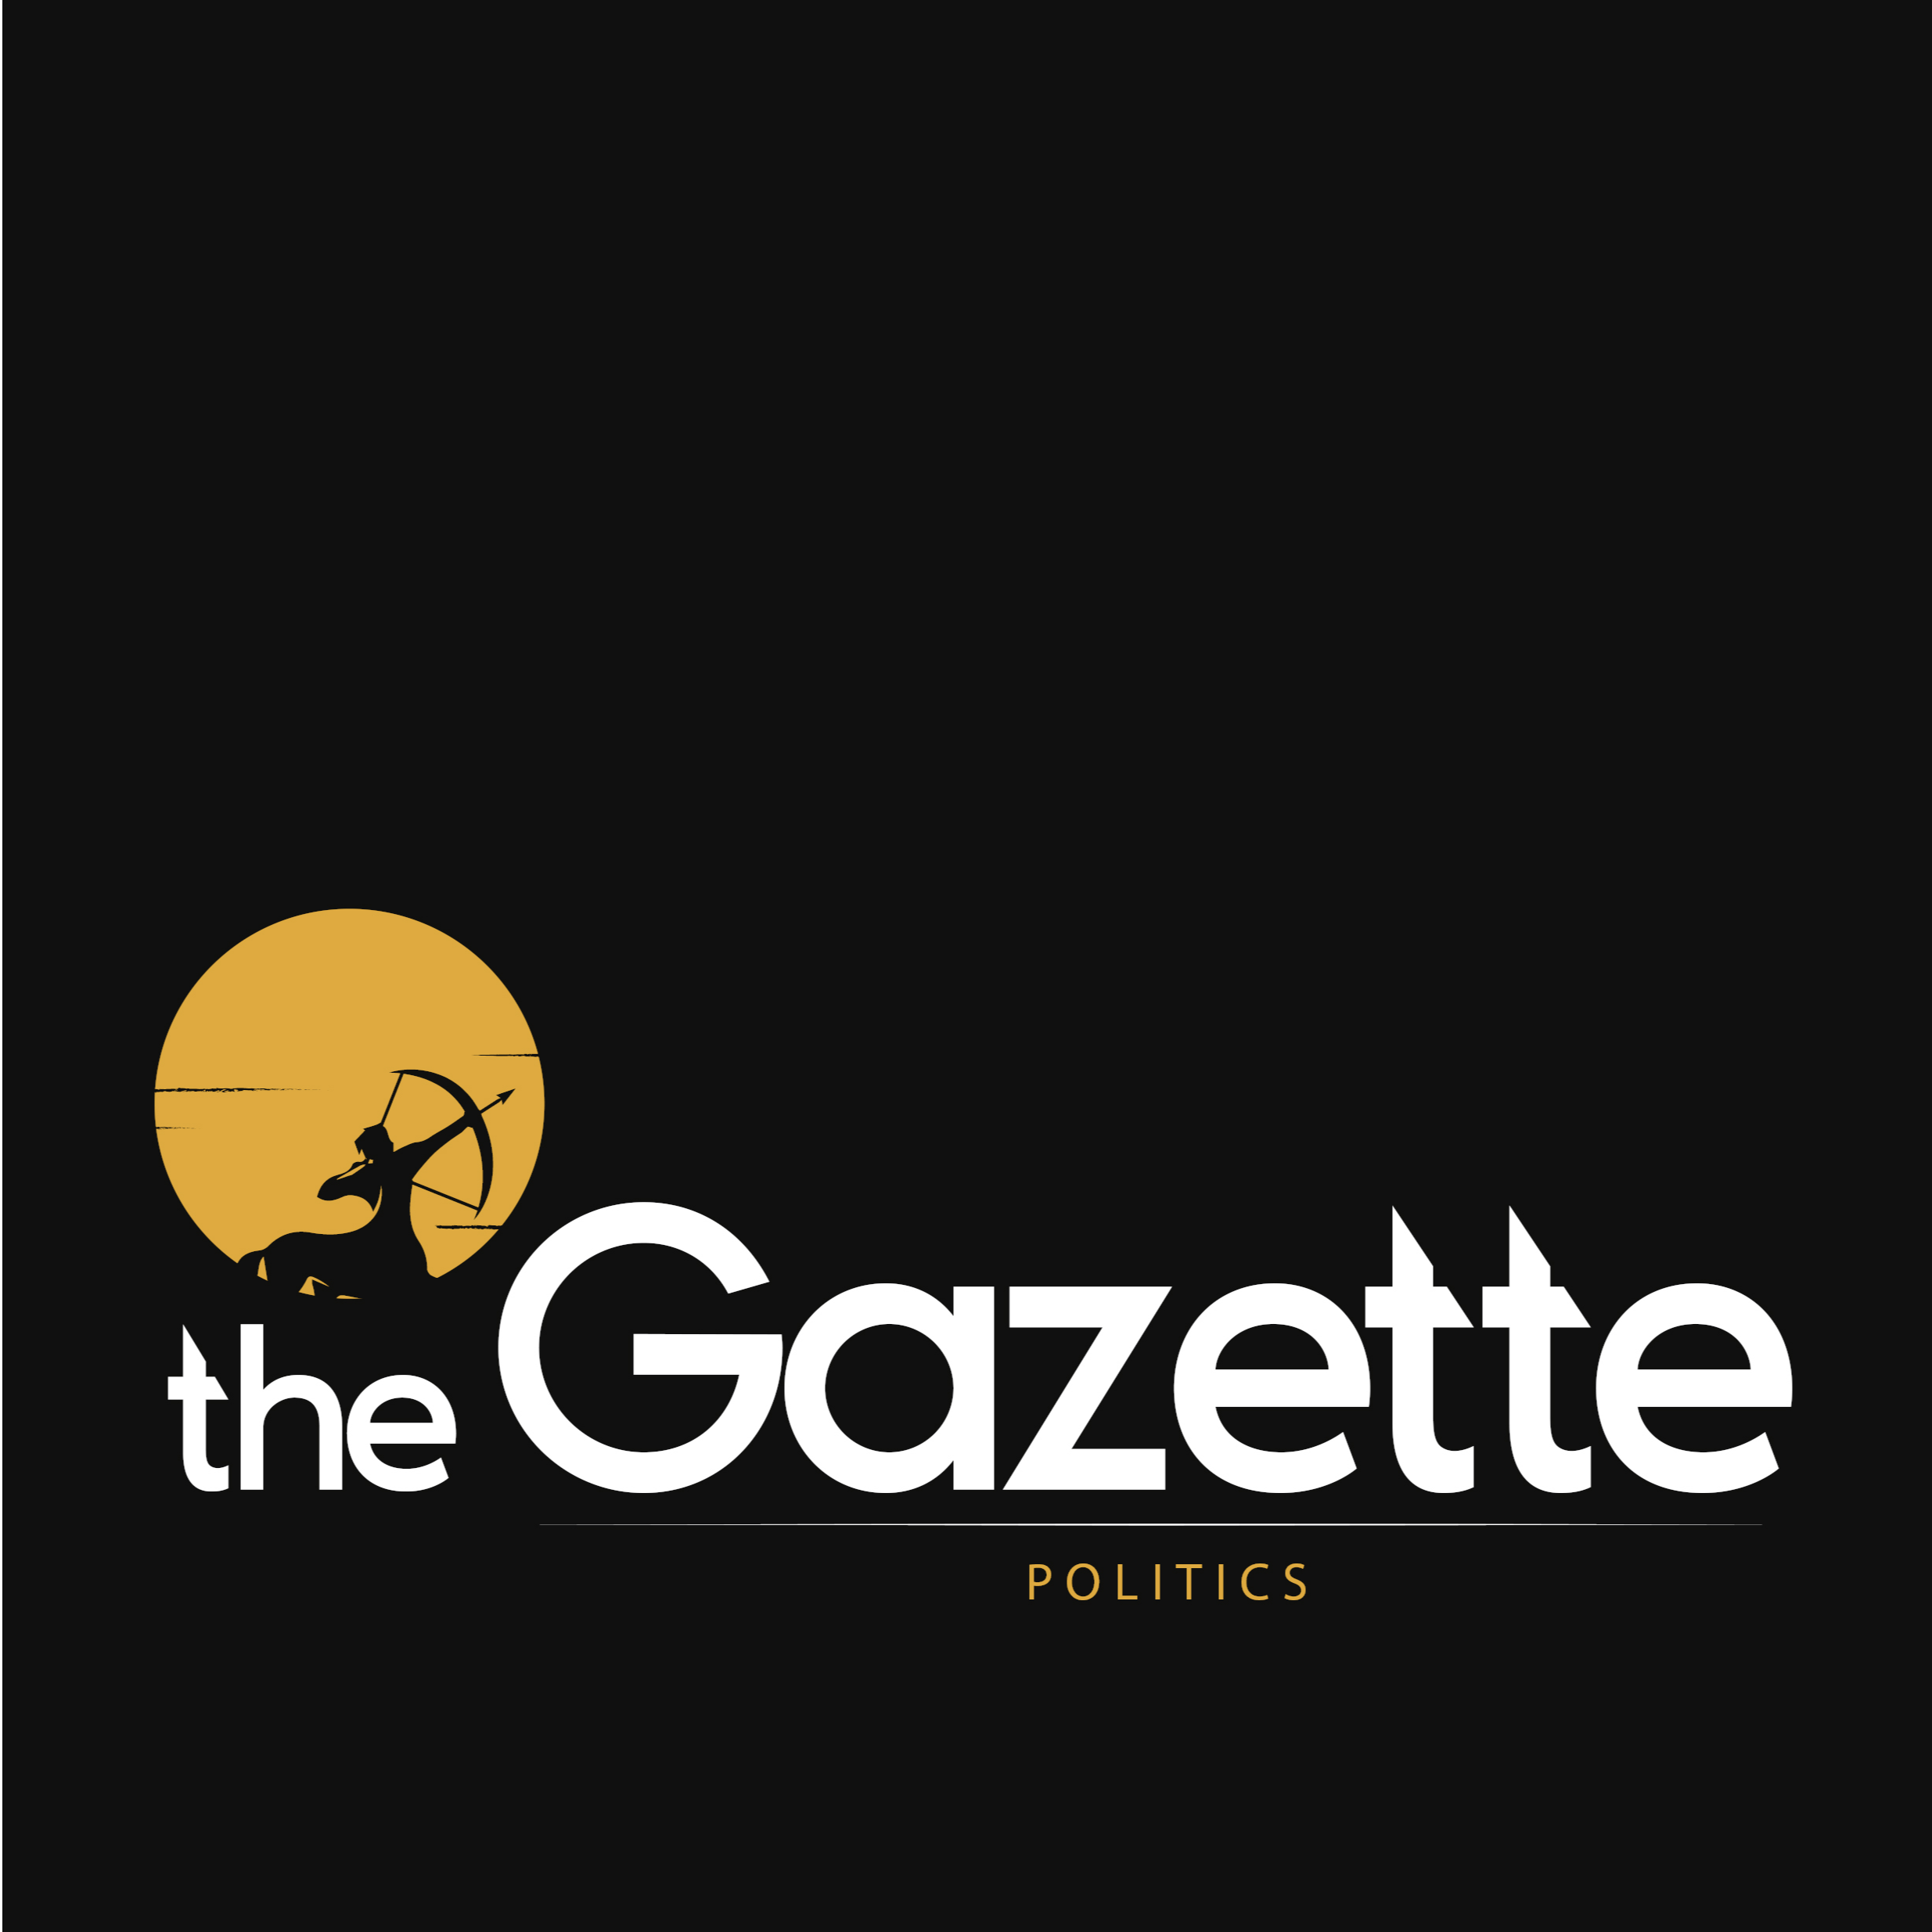 theGazette Radio